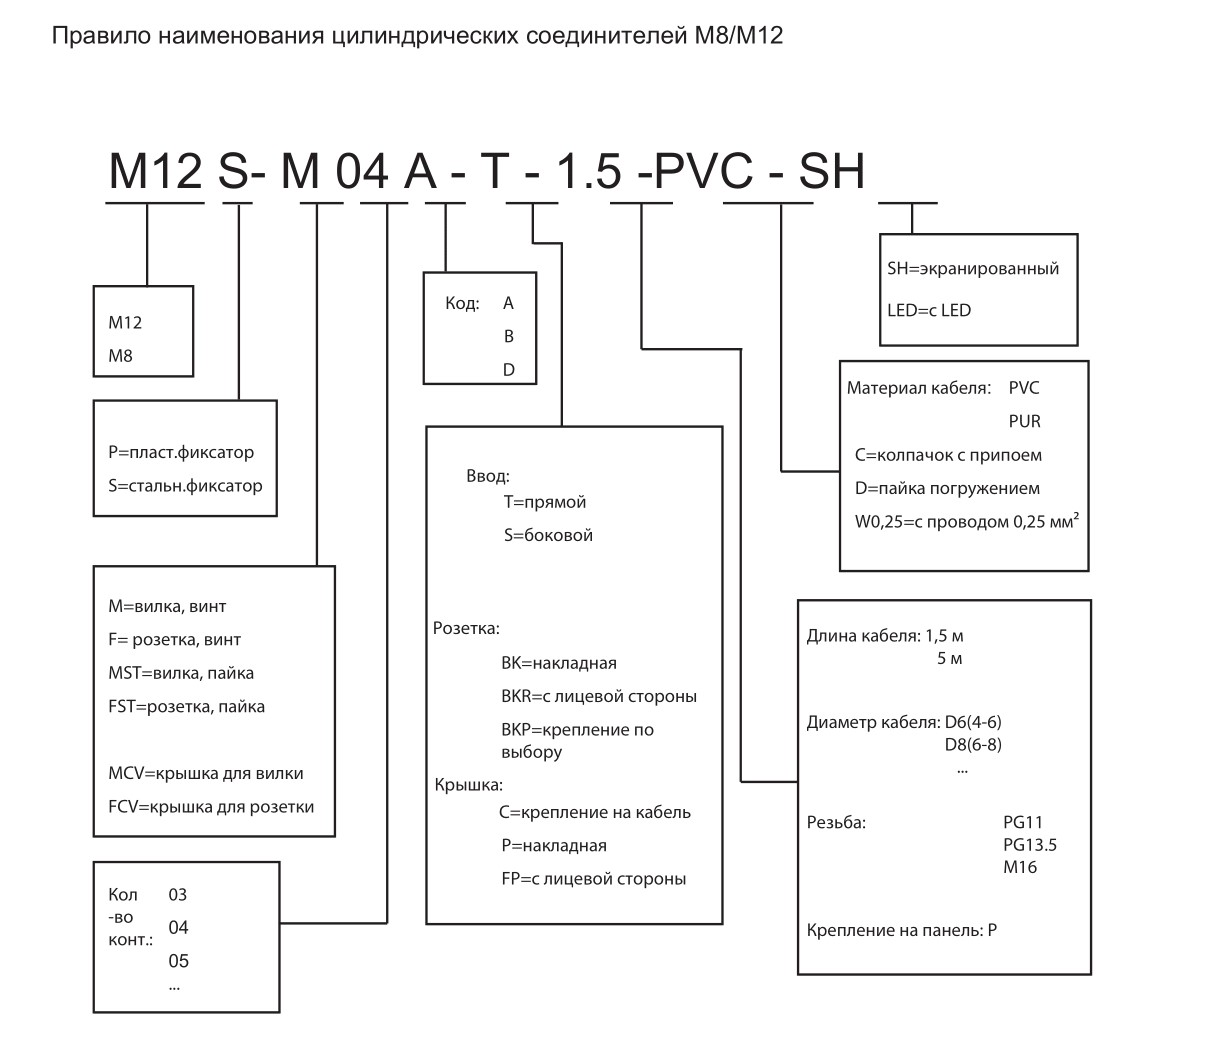 Цилиндрический соединитель-вилка M12-M04D-BKR-PG9-D 1630043141007: Структура обозначения